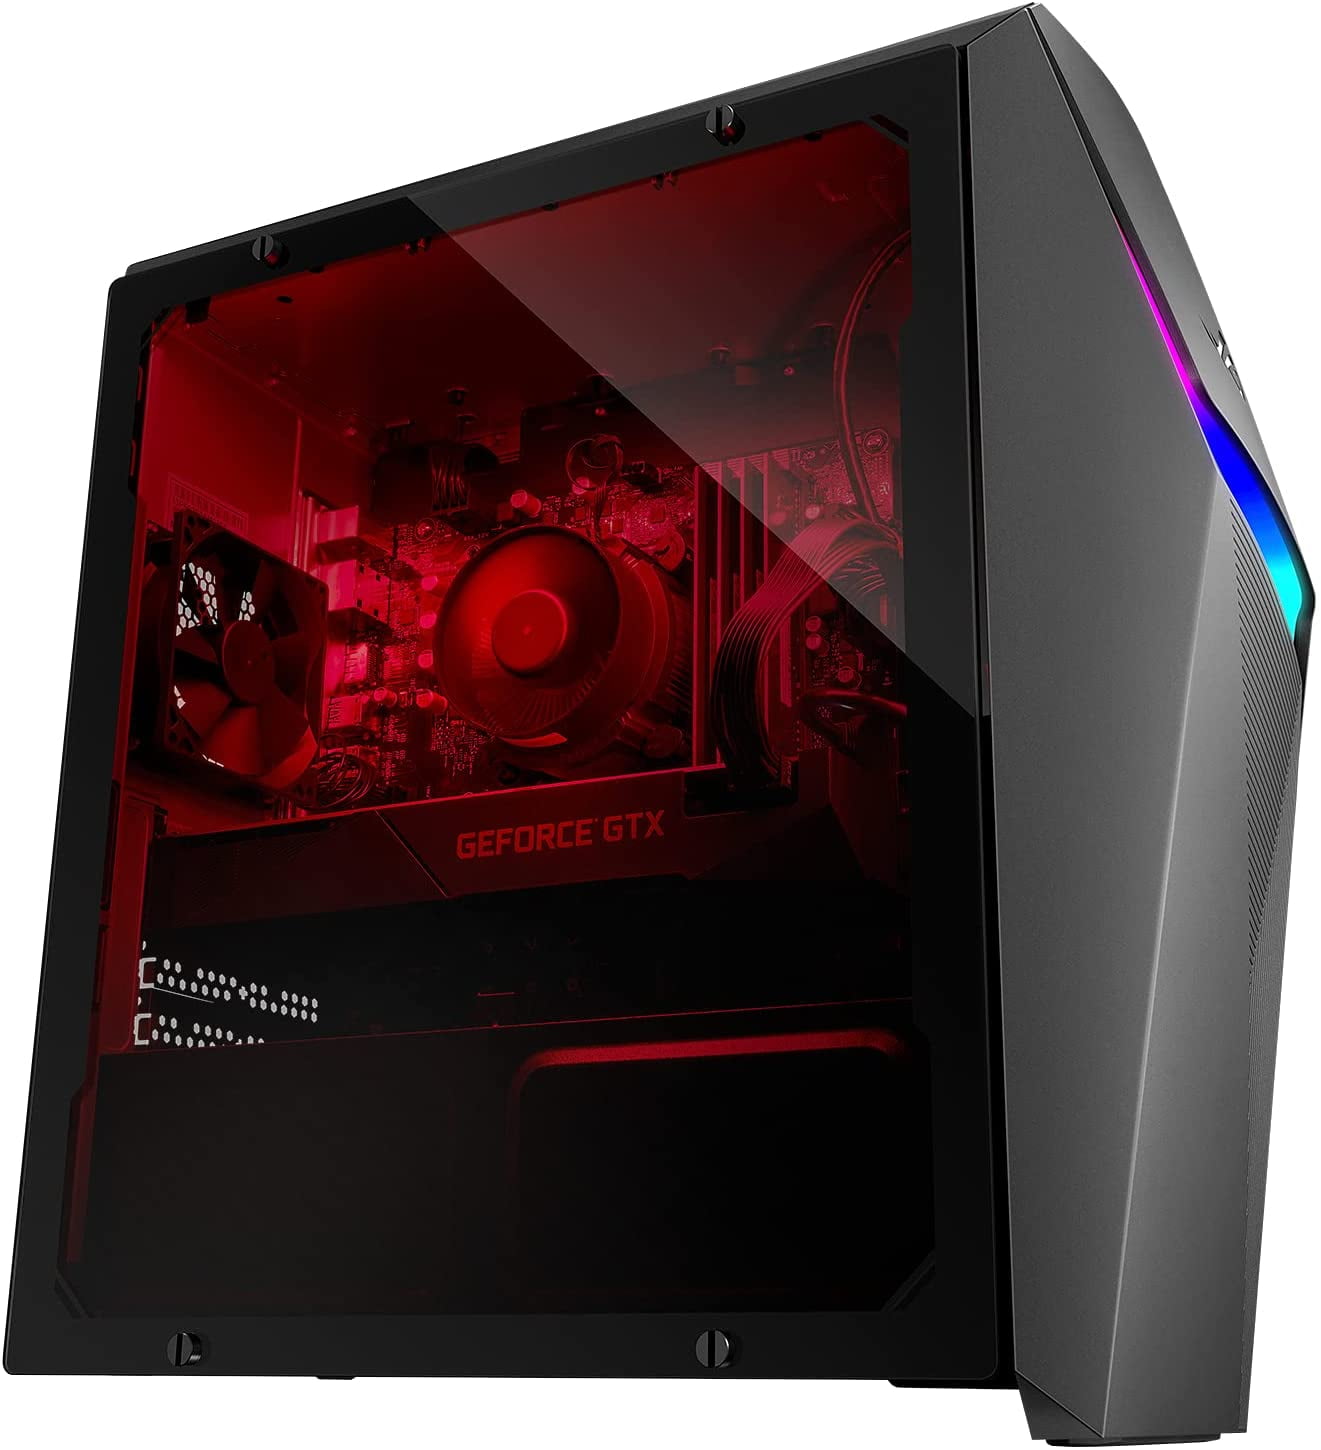 ASUS ROG Strix G10 Gaming Entertainment Desktop PC AMD Ryzen 7